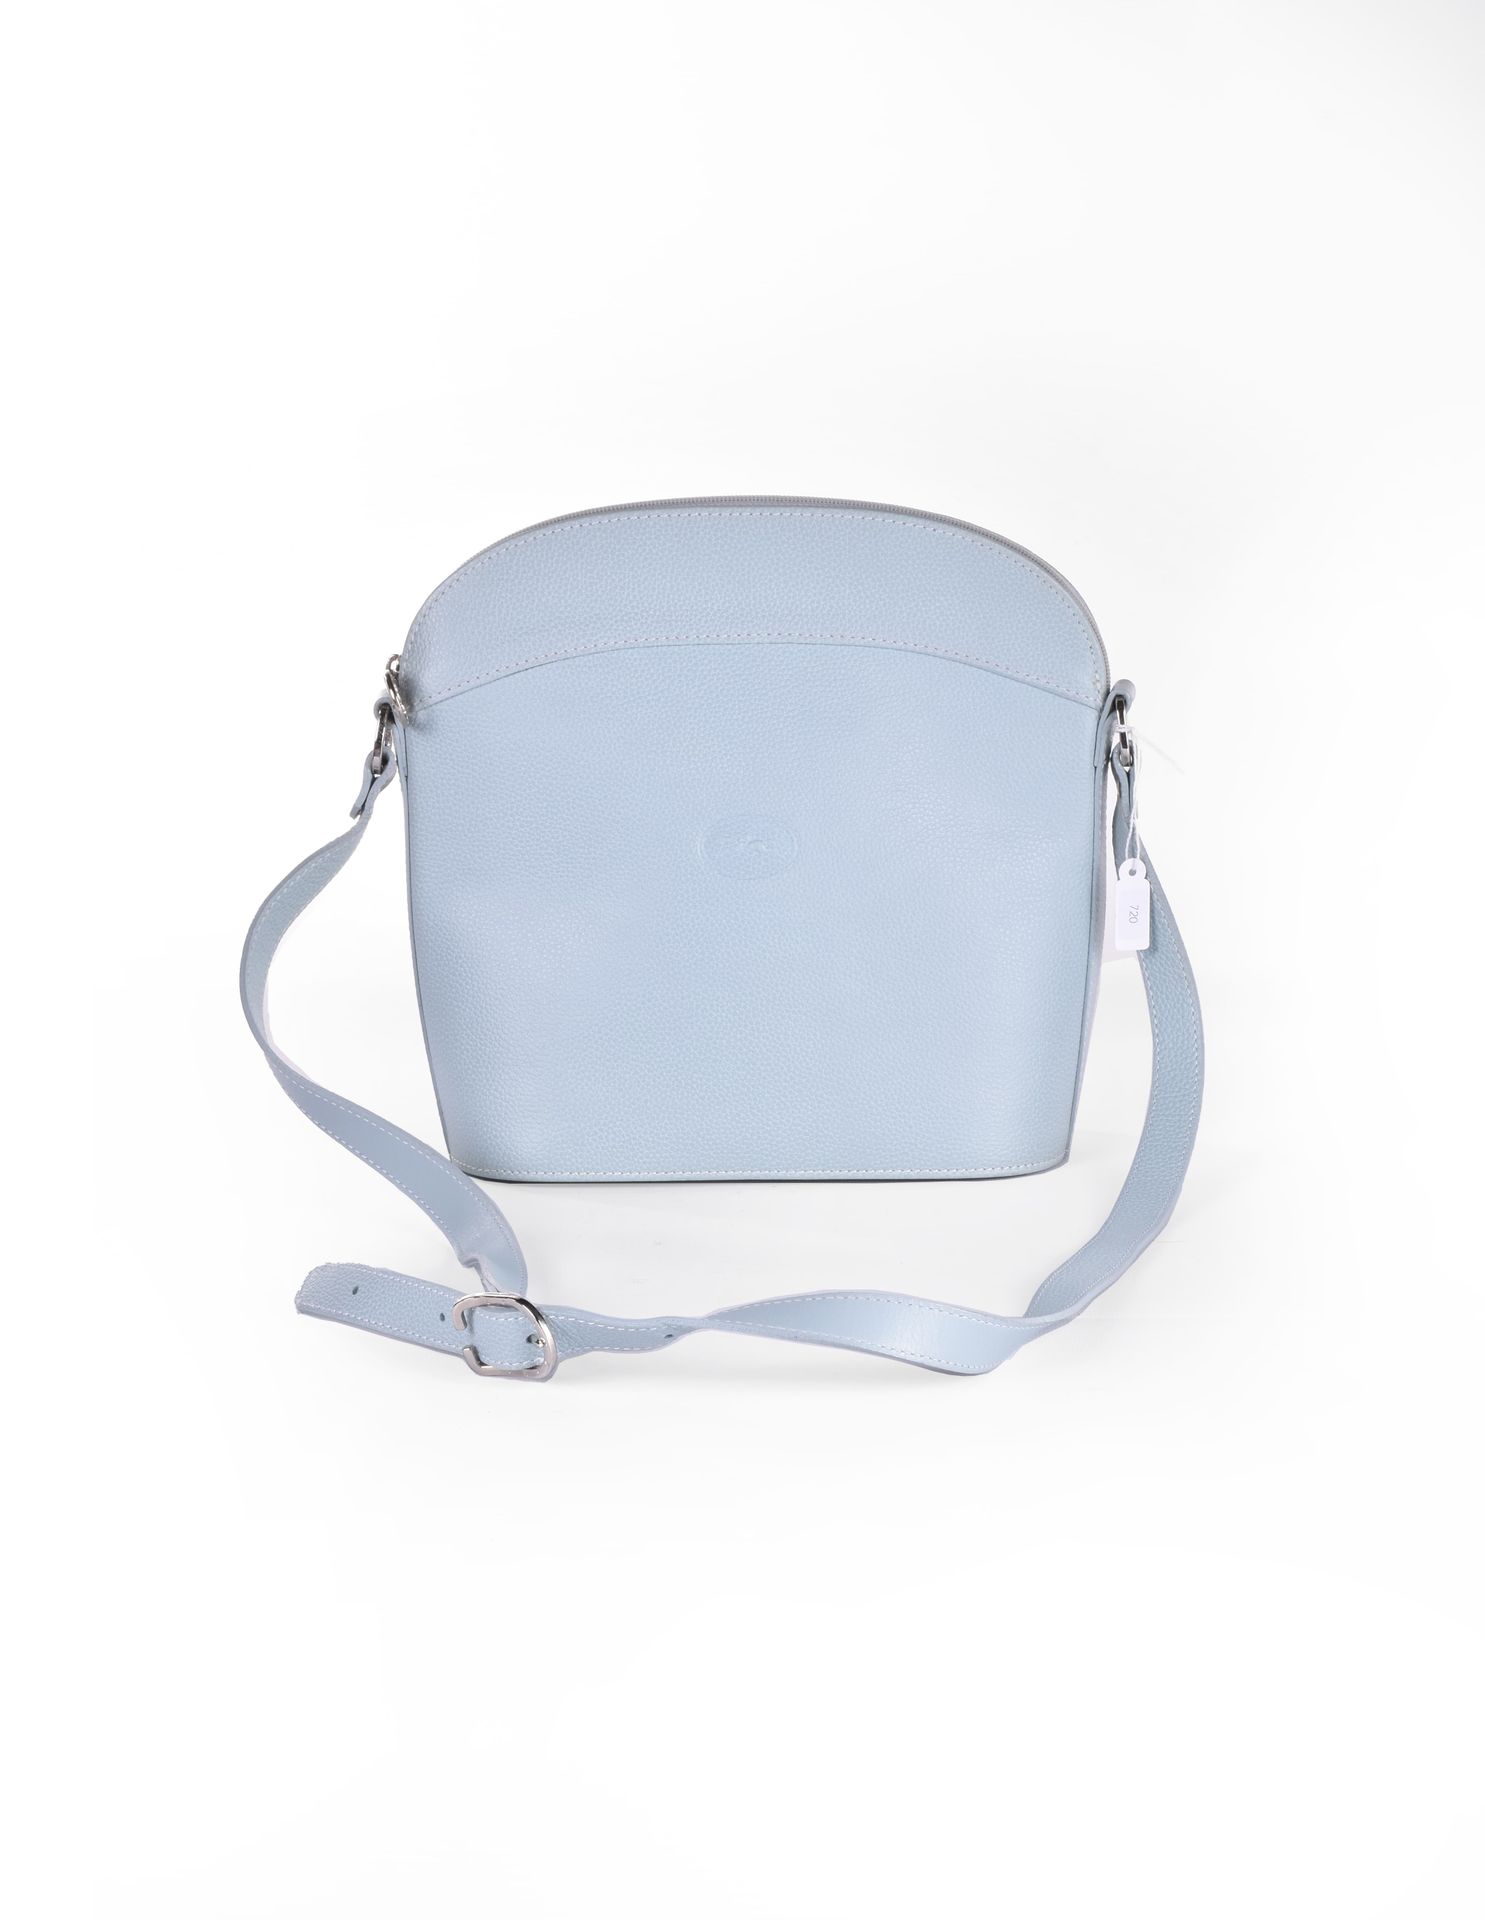 LONGCHAMP Shoulder bag.
Light blue leather.
Very good condition.
Height: 24 cm -&hellip;